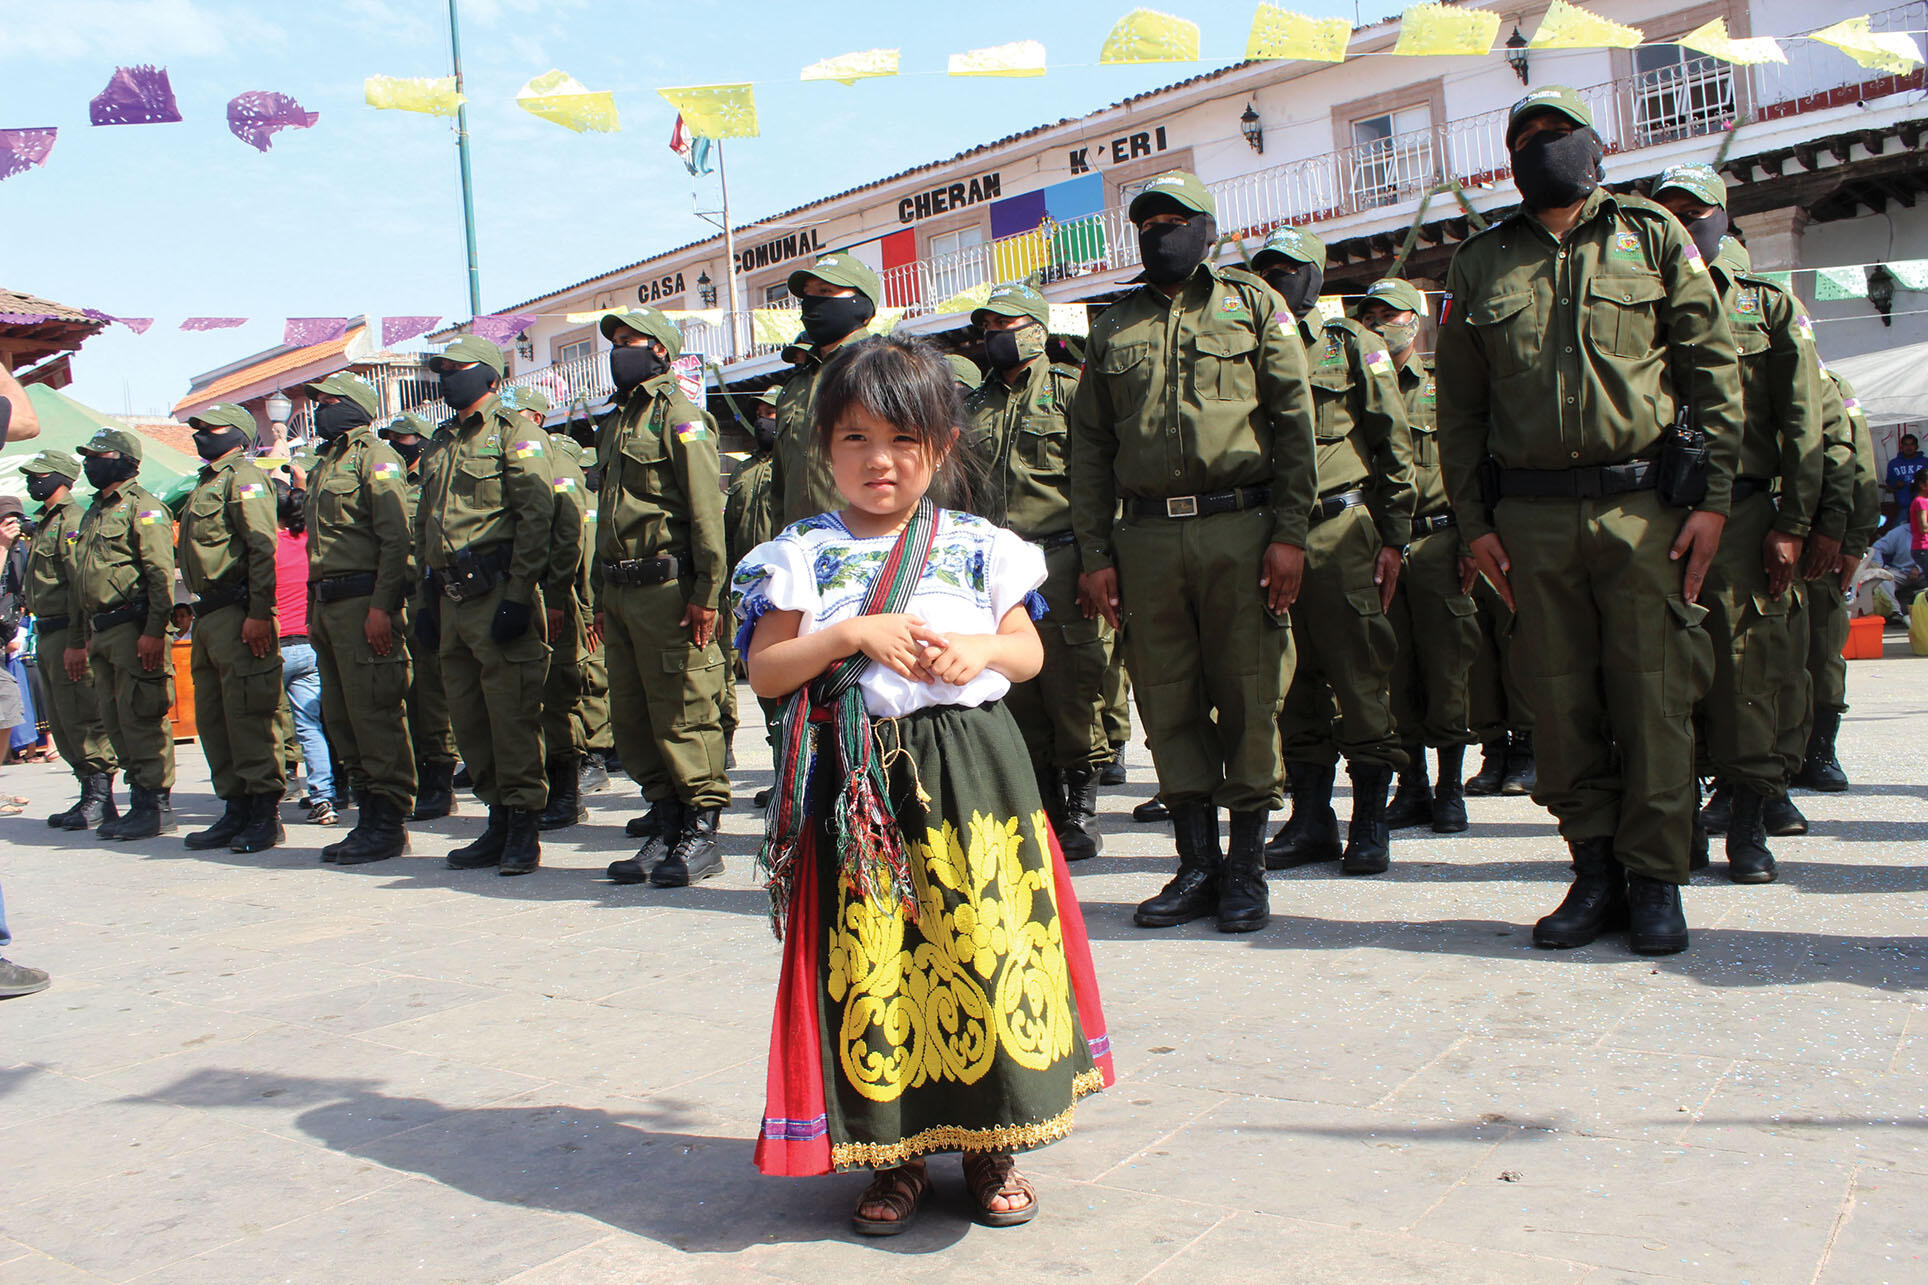 A young girl in a festival dress stands before an assembly of Cherán’s community guard. (Photo by Juan José Estrada Serafín.)